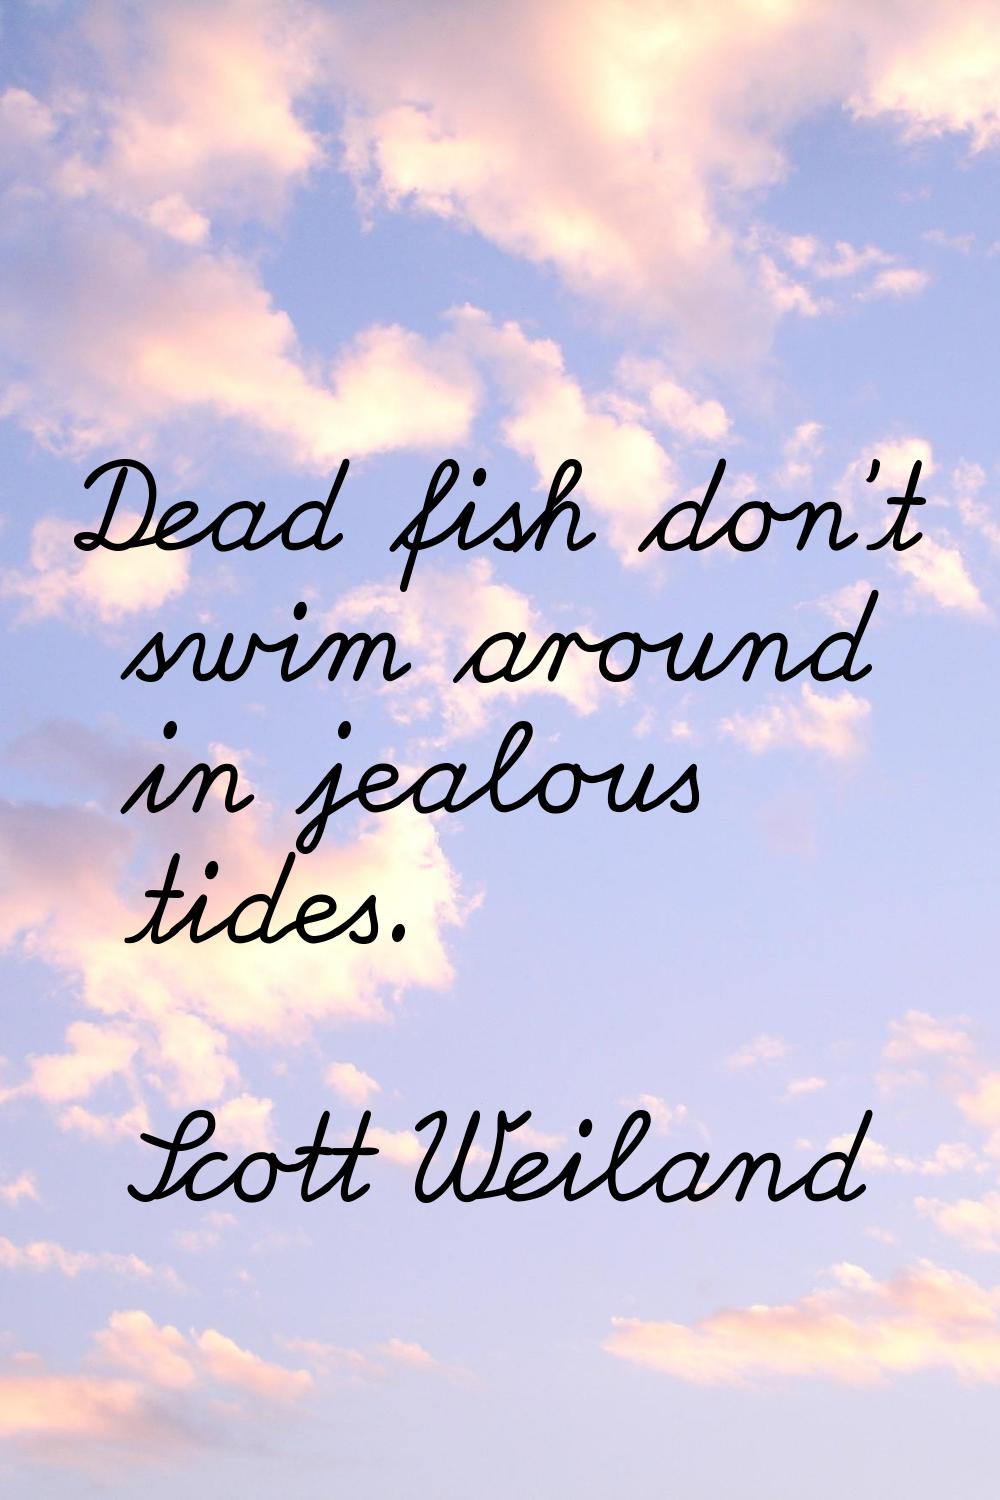 Dead fish don't swim around in jealous tides.